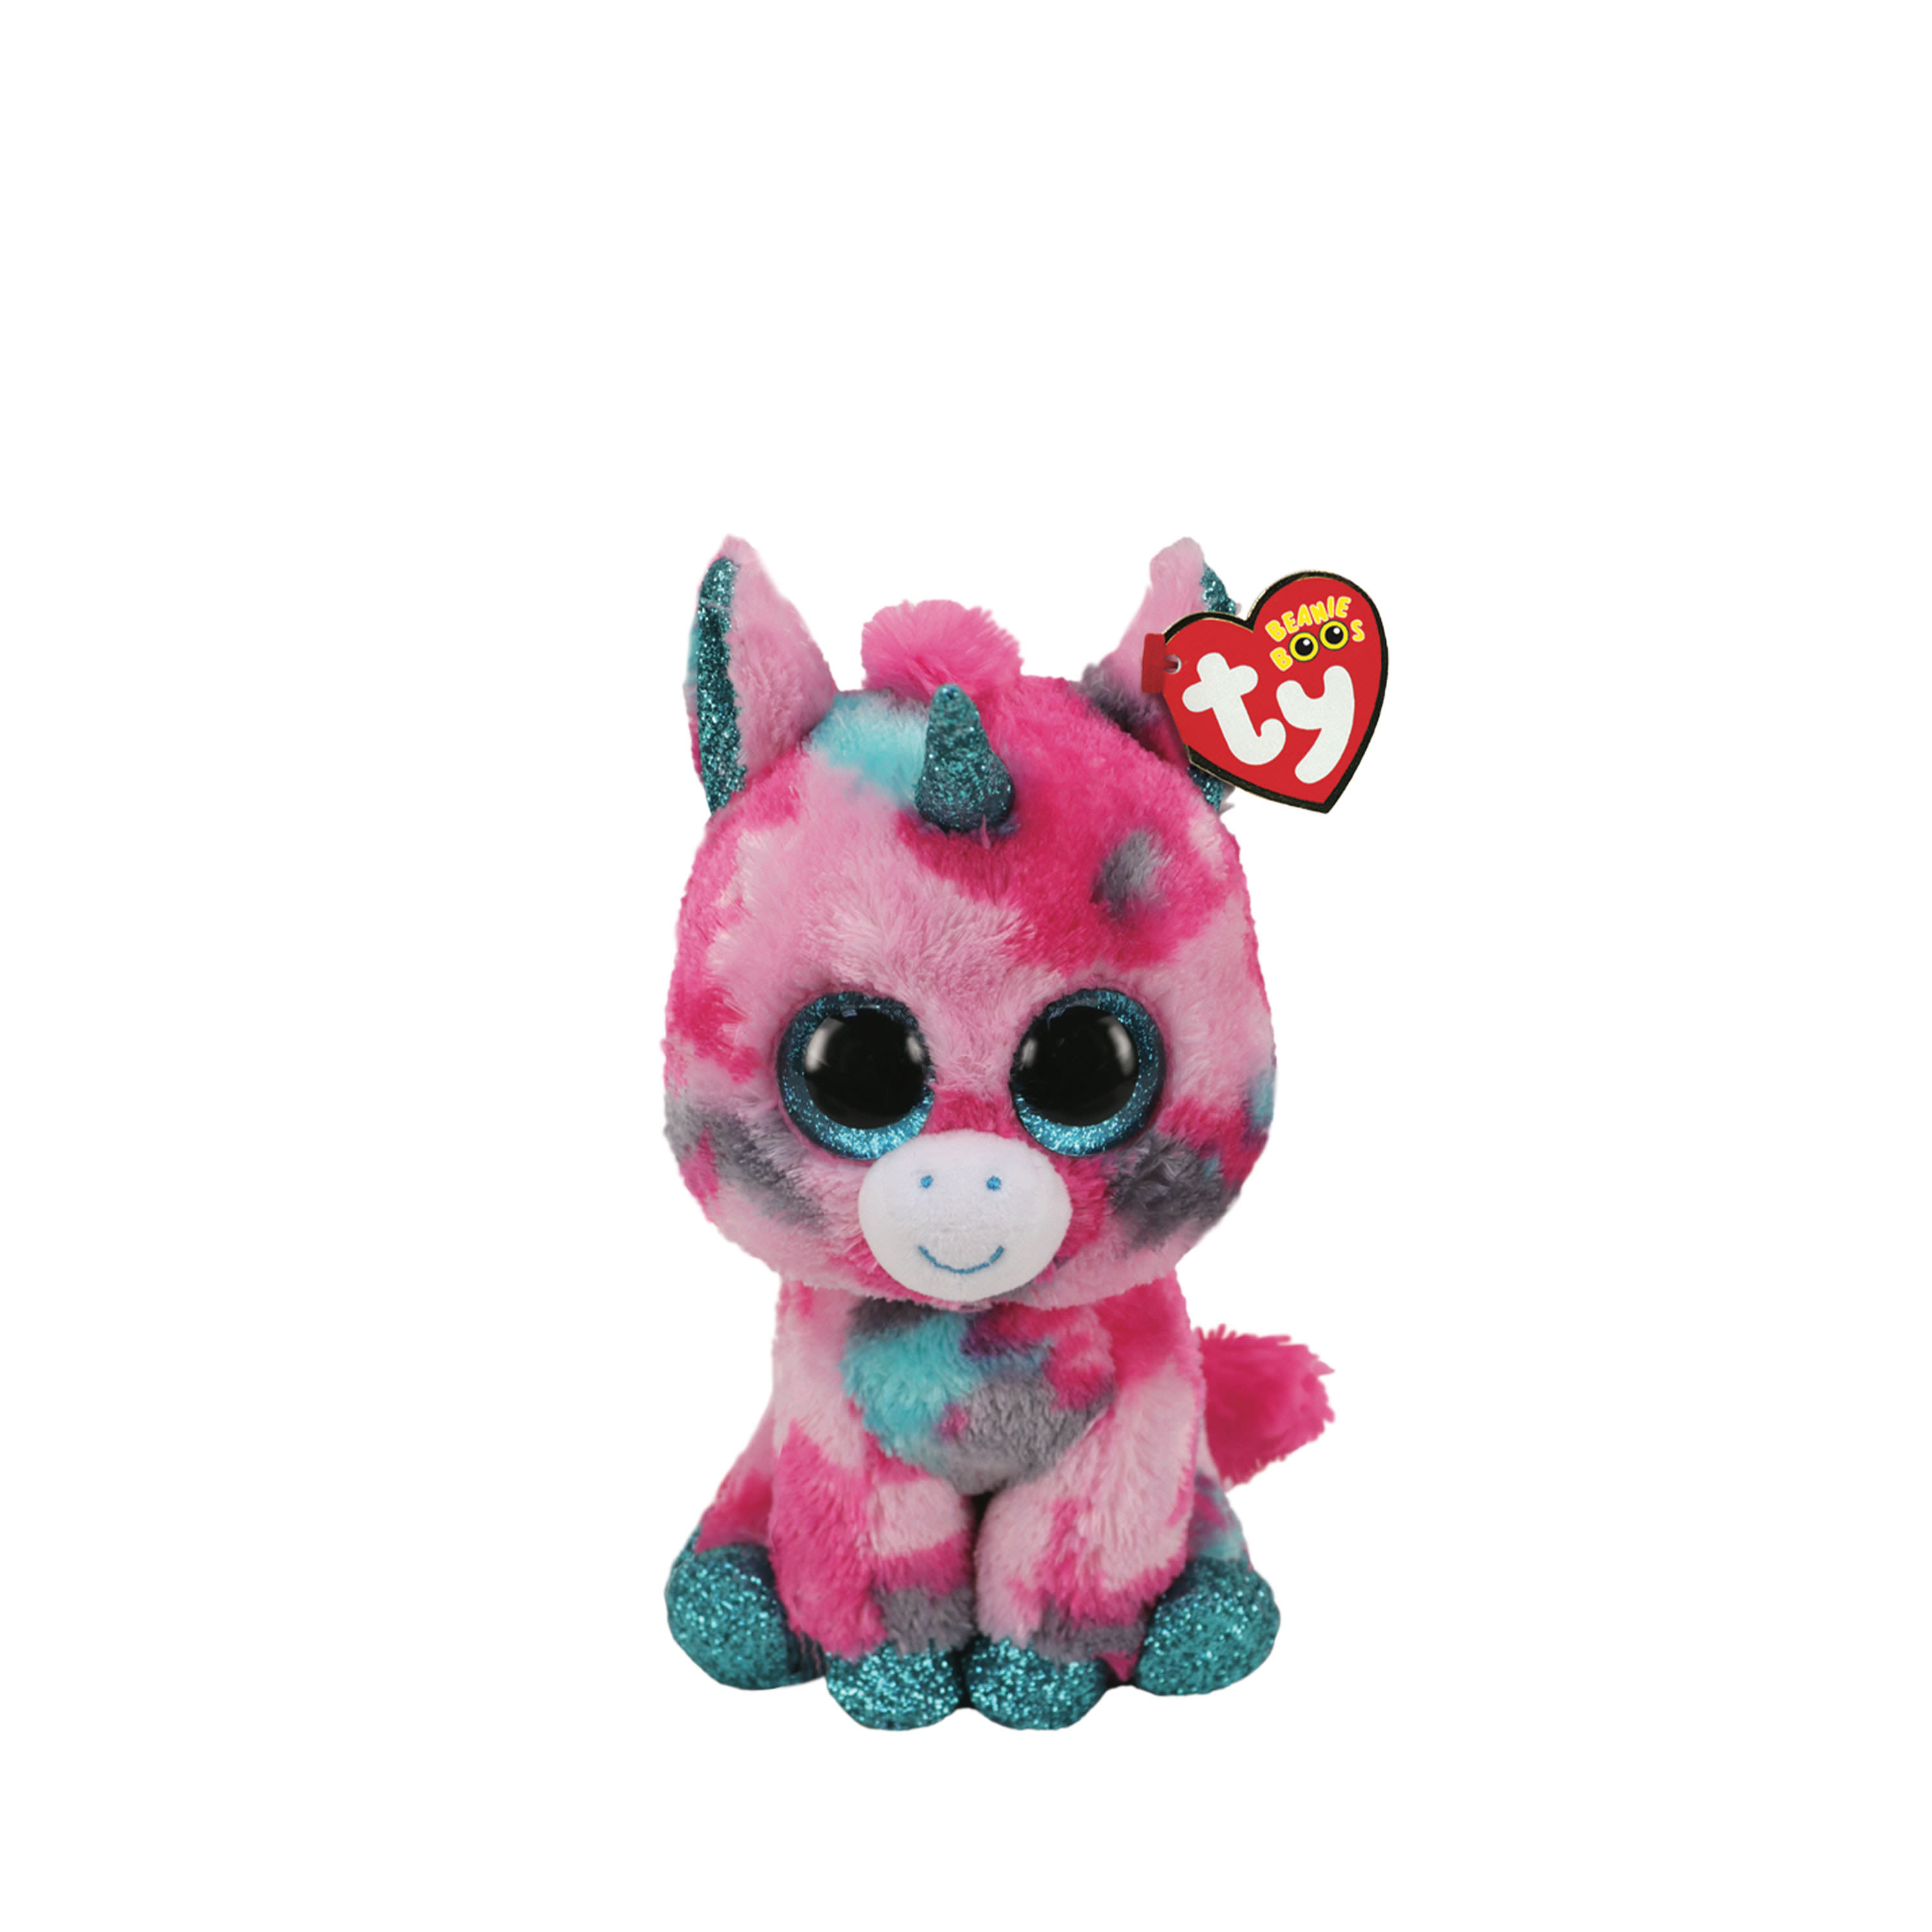 Beanie Boos GUMBALL - unicorn pink/aqua från TY